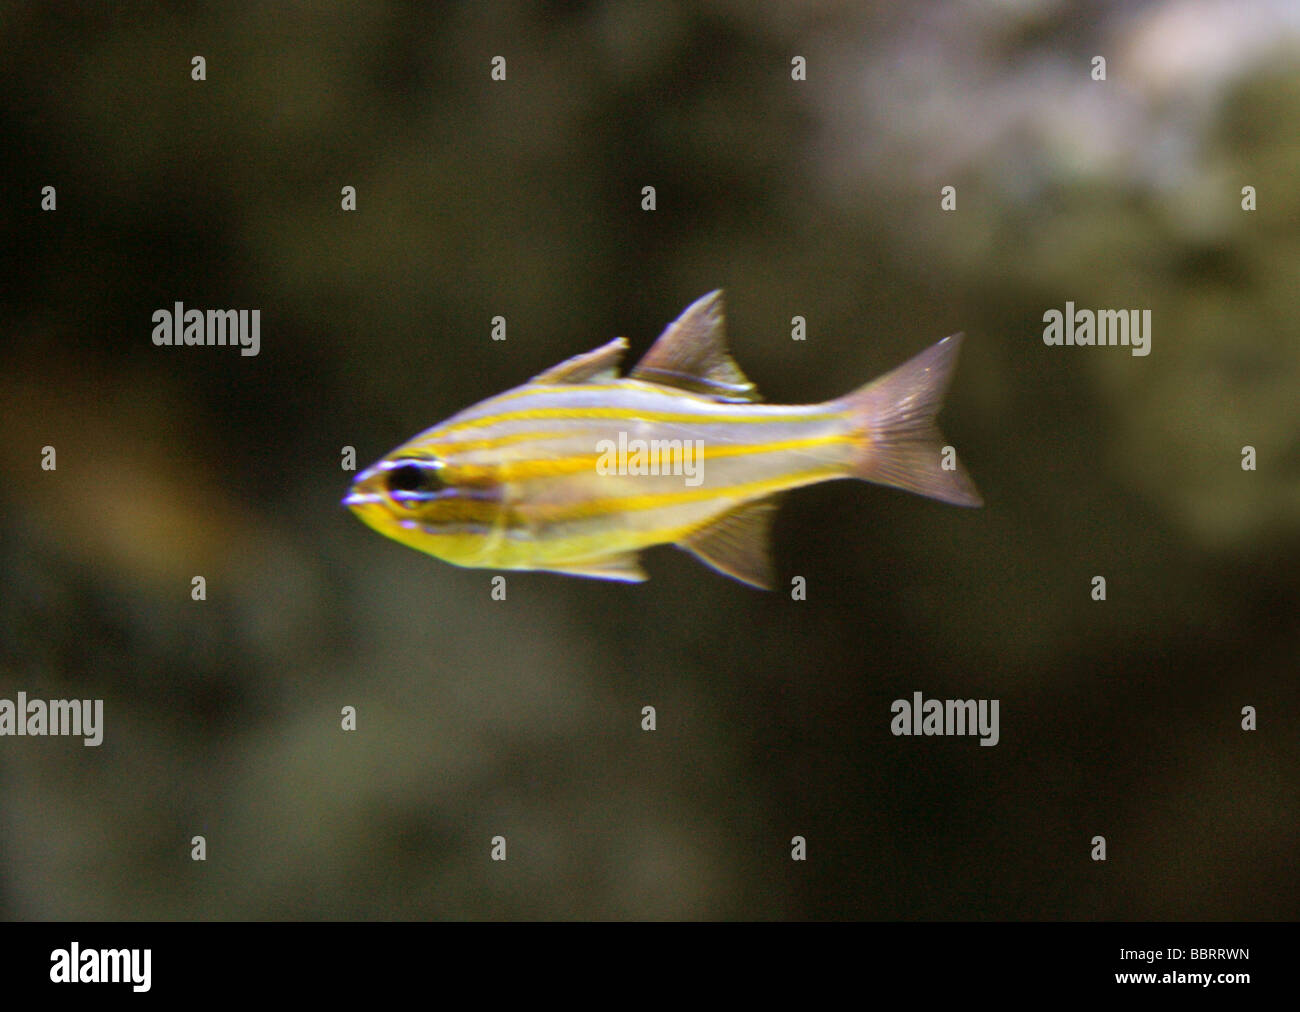 Gold-striped Cardinal Fish, Apogon cyanosoma, Apogonidae, Perciformes.  Tropical Indian Ocean Stock Photo